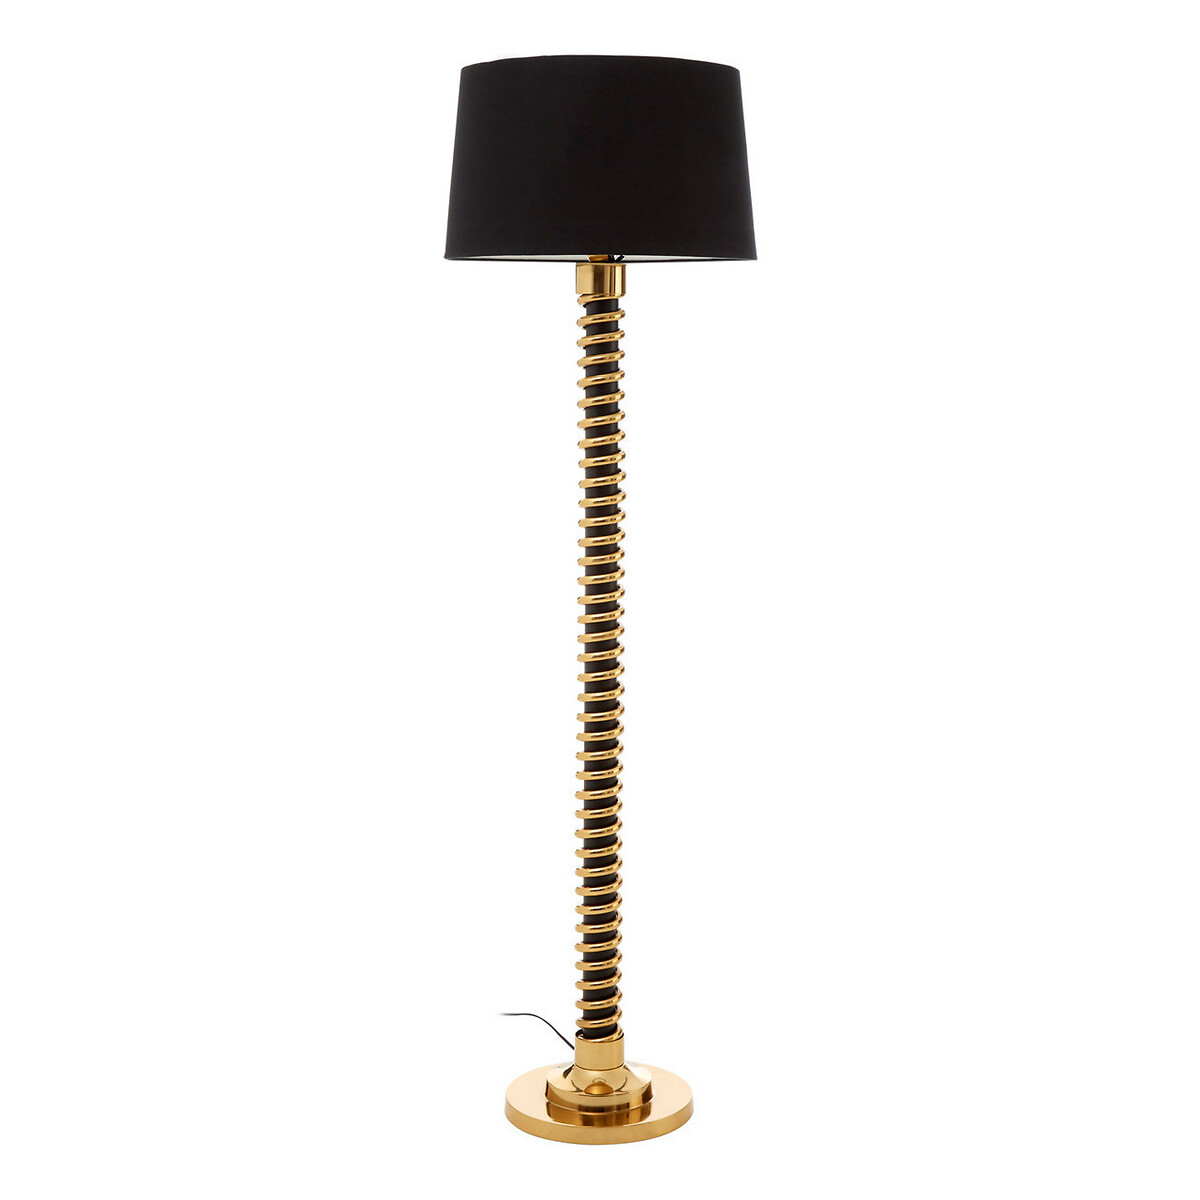 Black Shade Floor Lamp Gold, Gold Floor Lamp With Black Shade